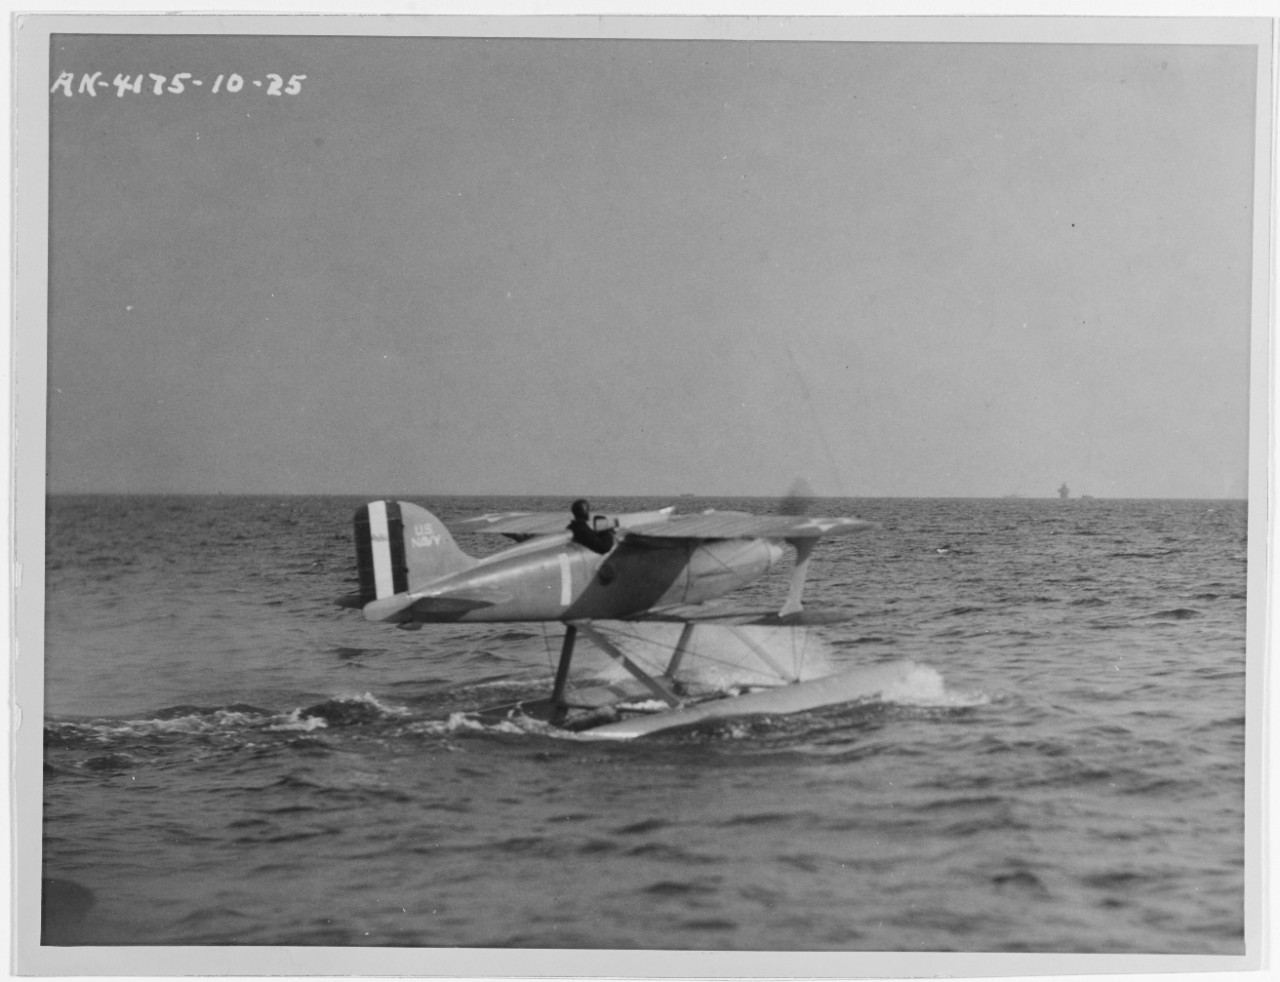 Curtiss R3C-2 Racer